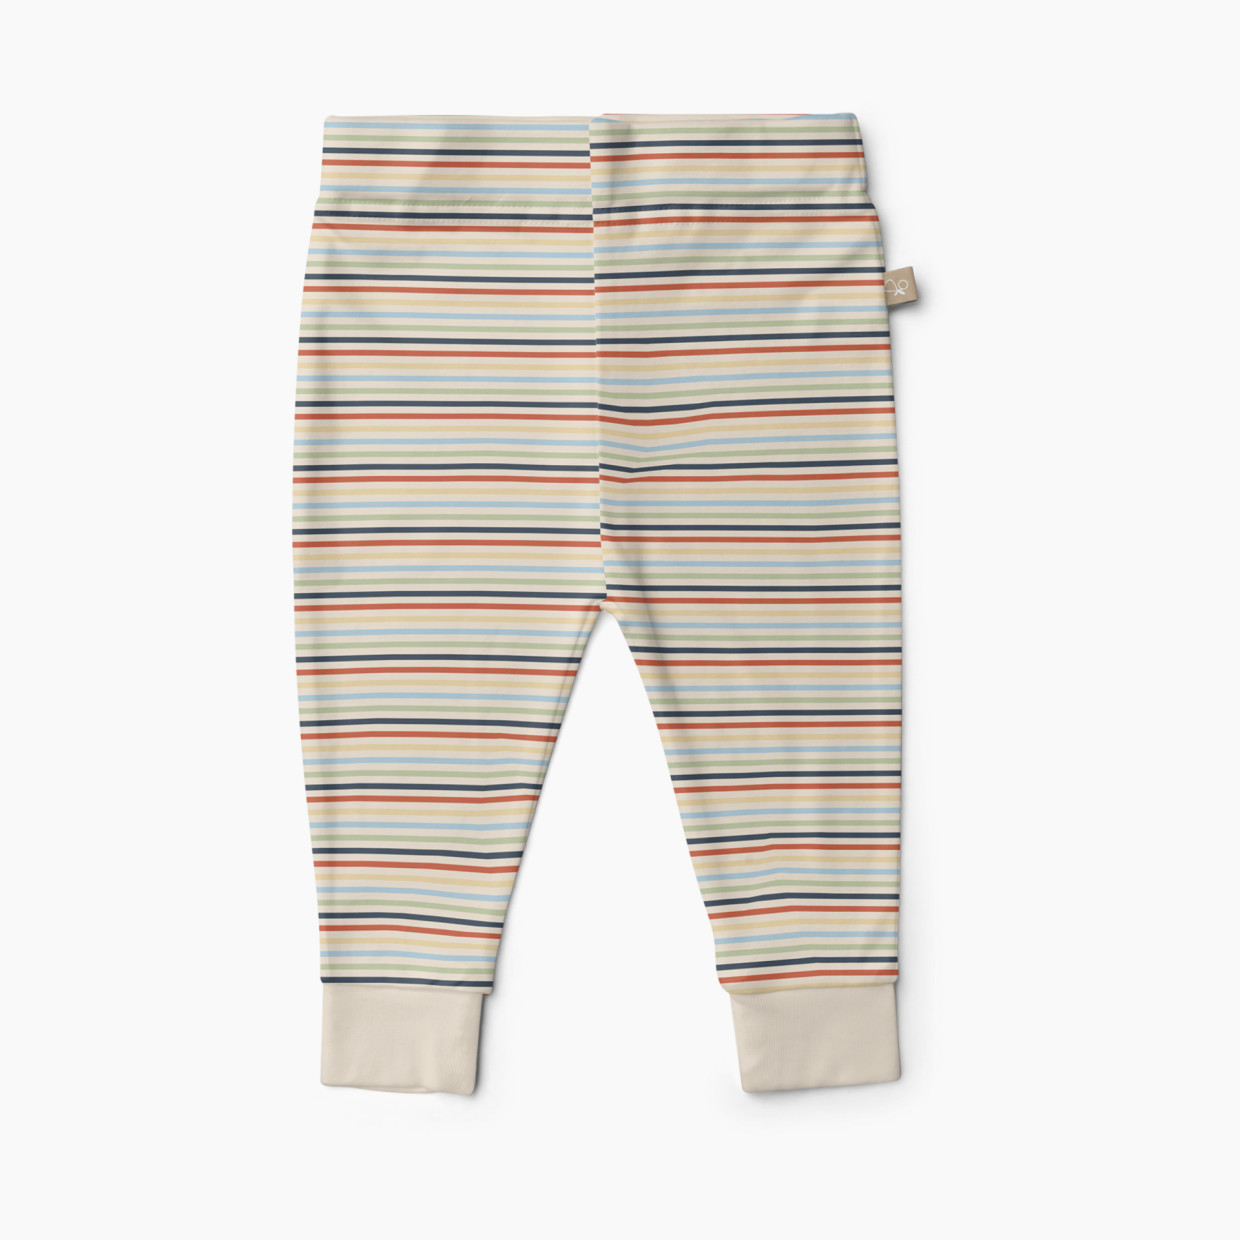 Goumi Kids x Babylist Baby Pants - Warm Stripe, 3-6 M.